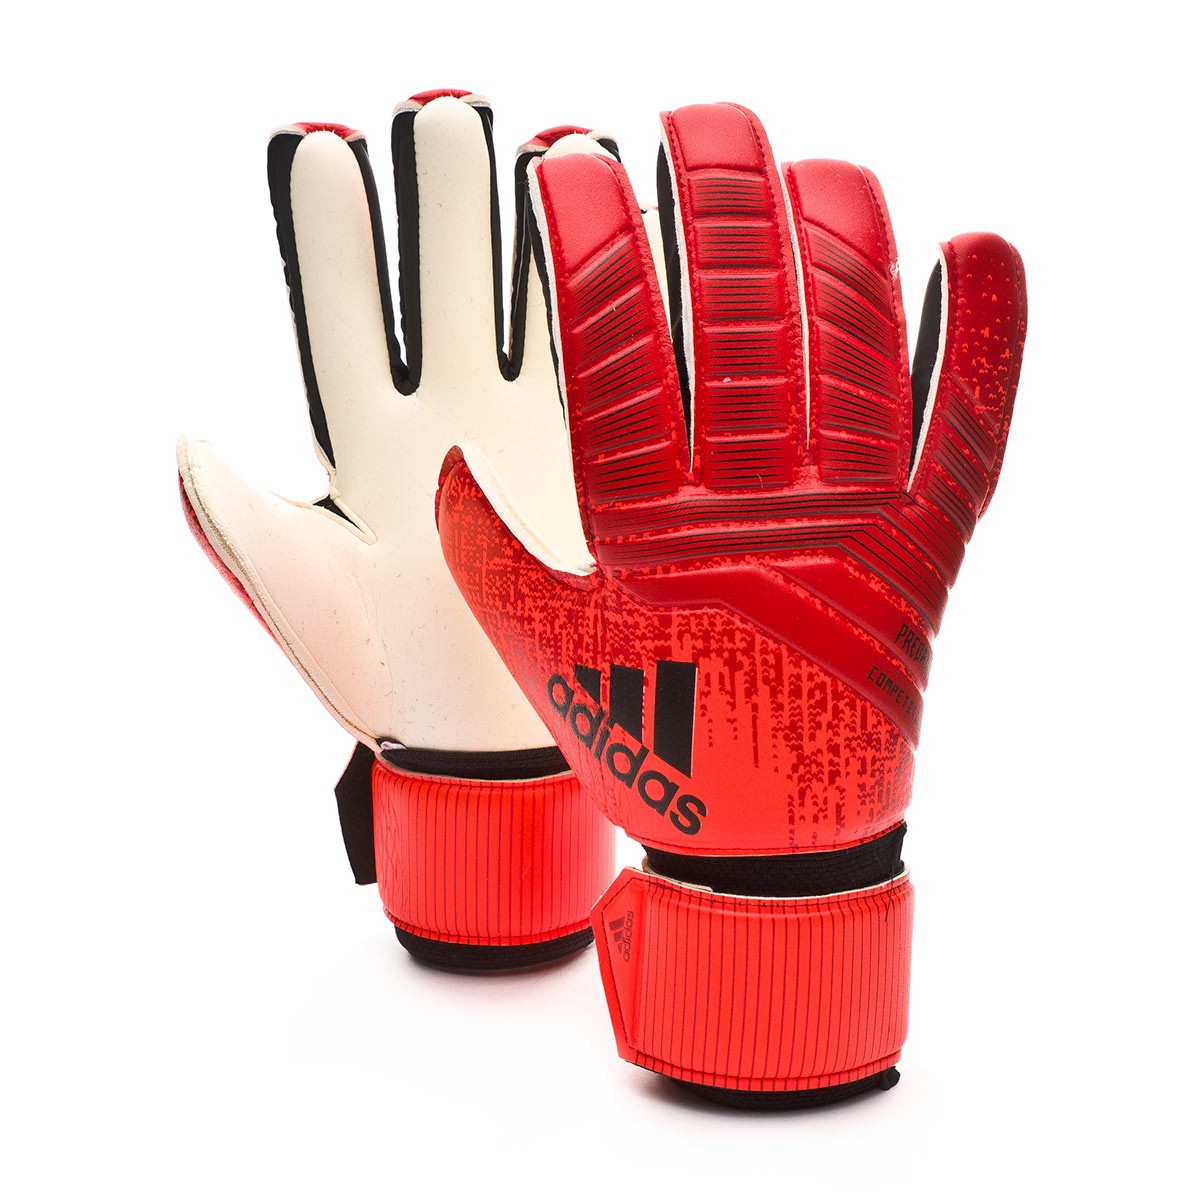 predator competition goalkeeper gloves